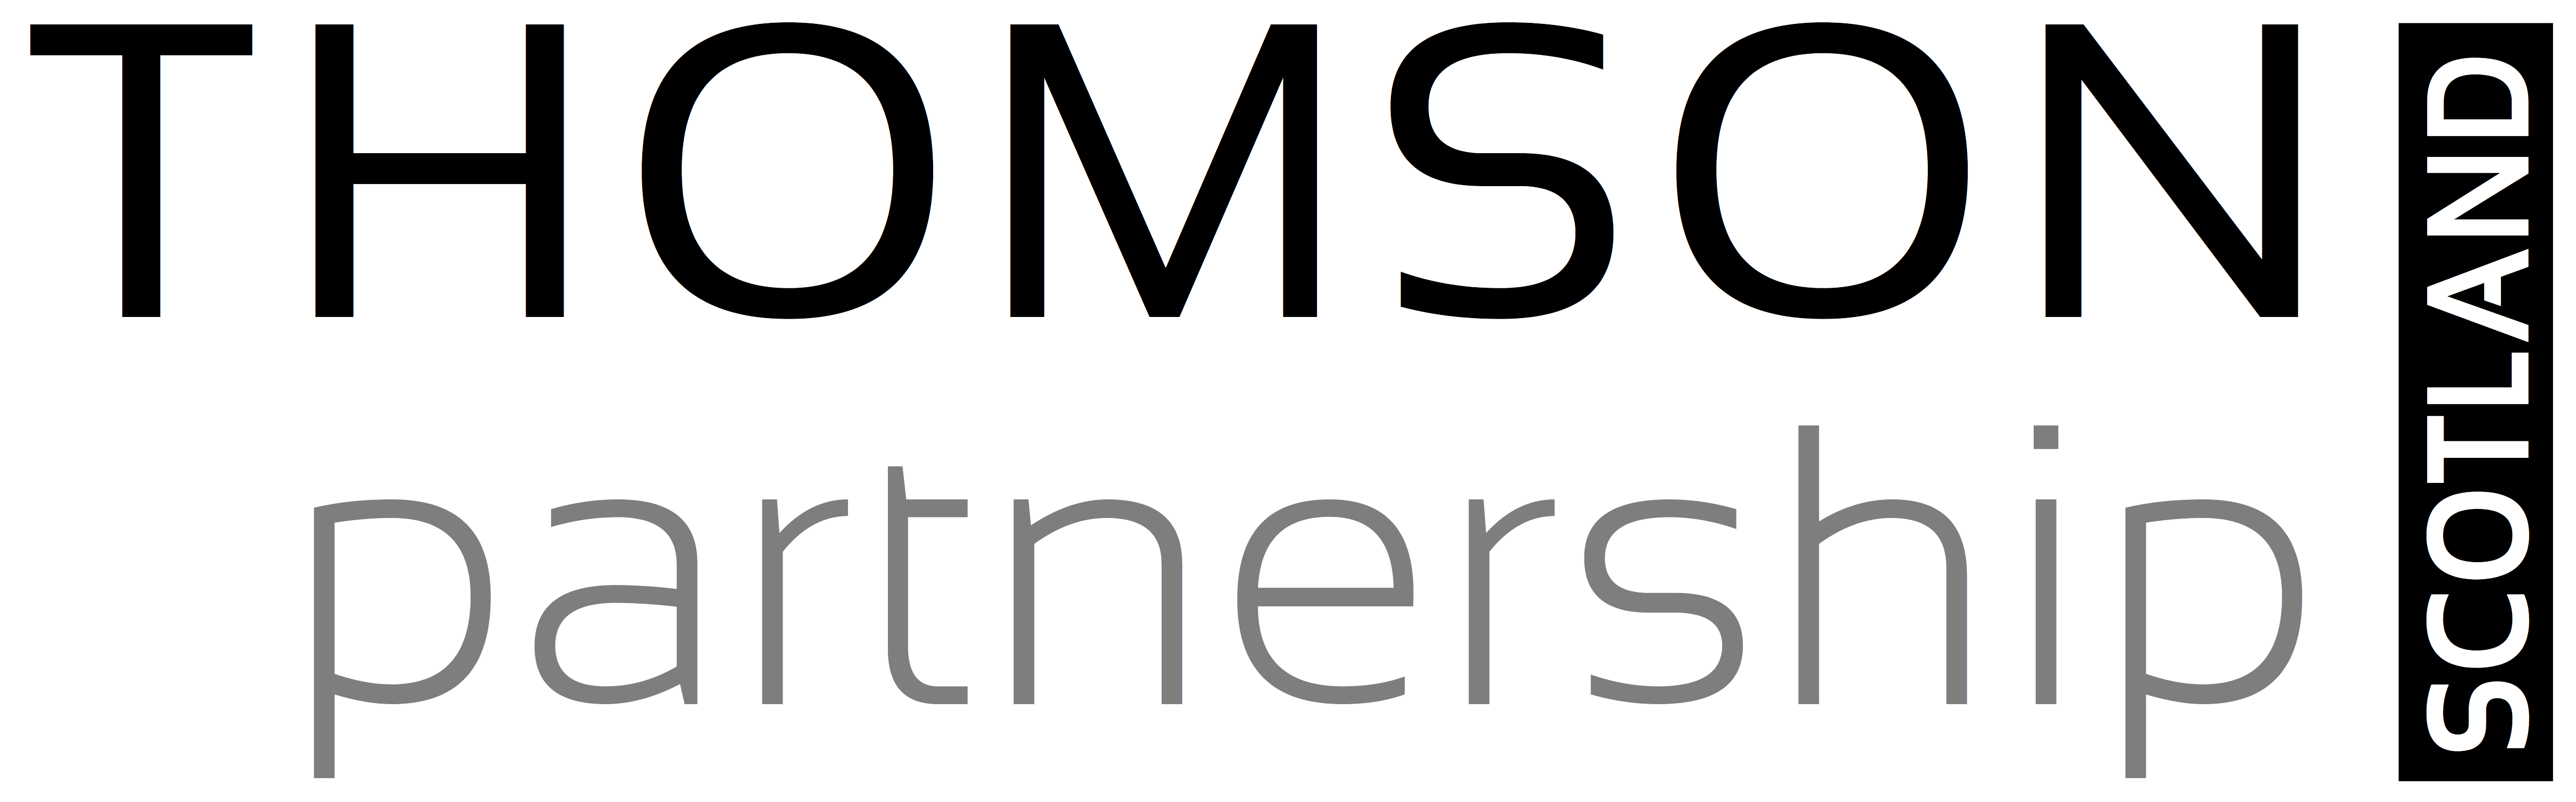 Thomson Partnership Scotland